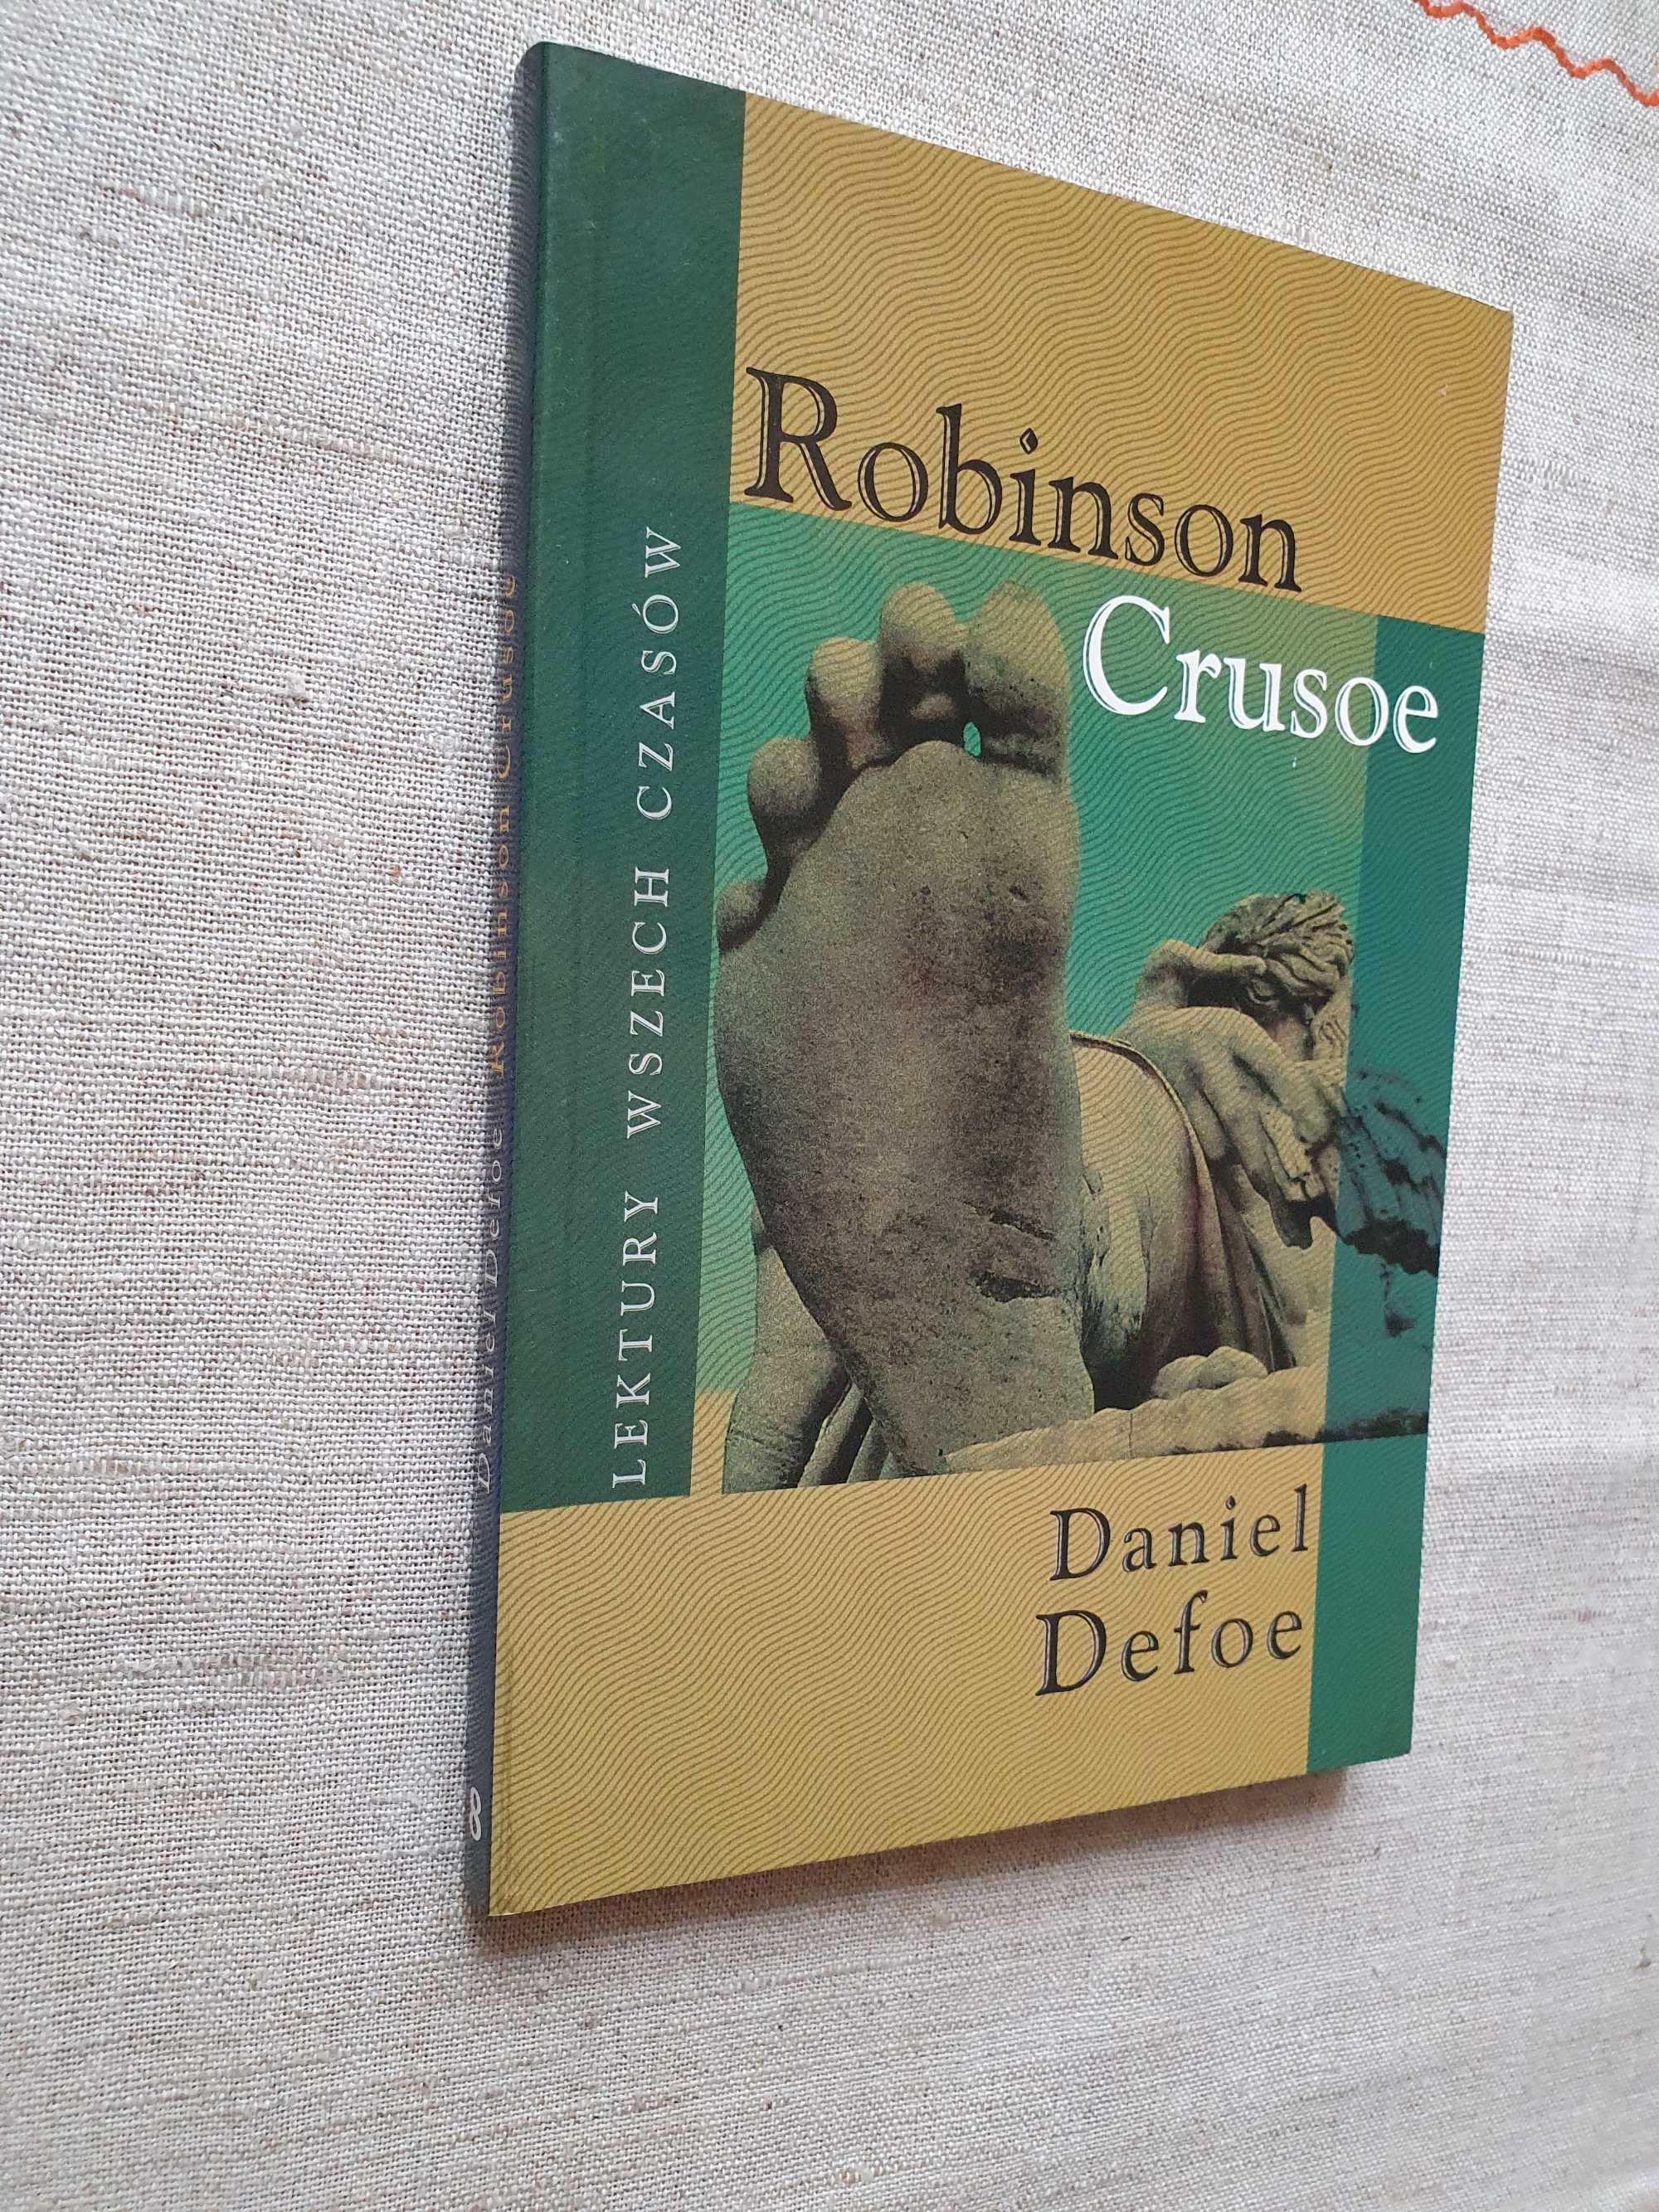 Książka Daniel Defoe "Robinson Crusoe"